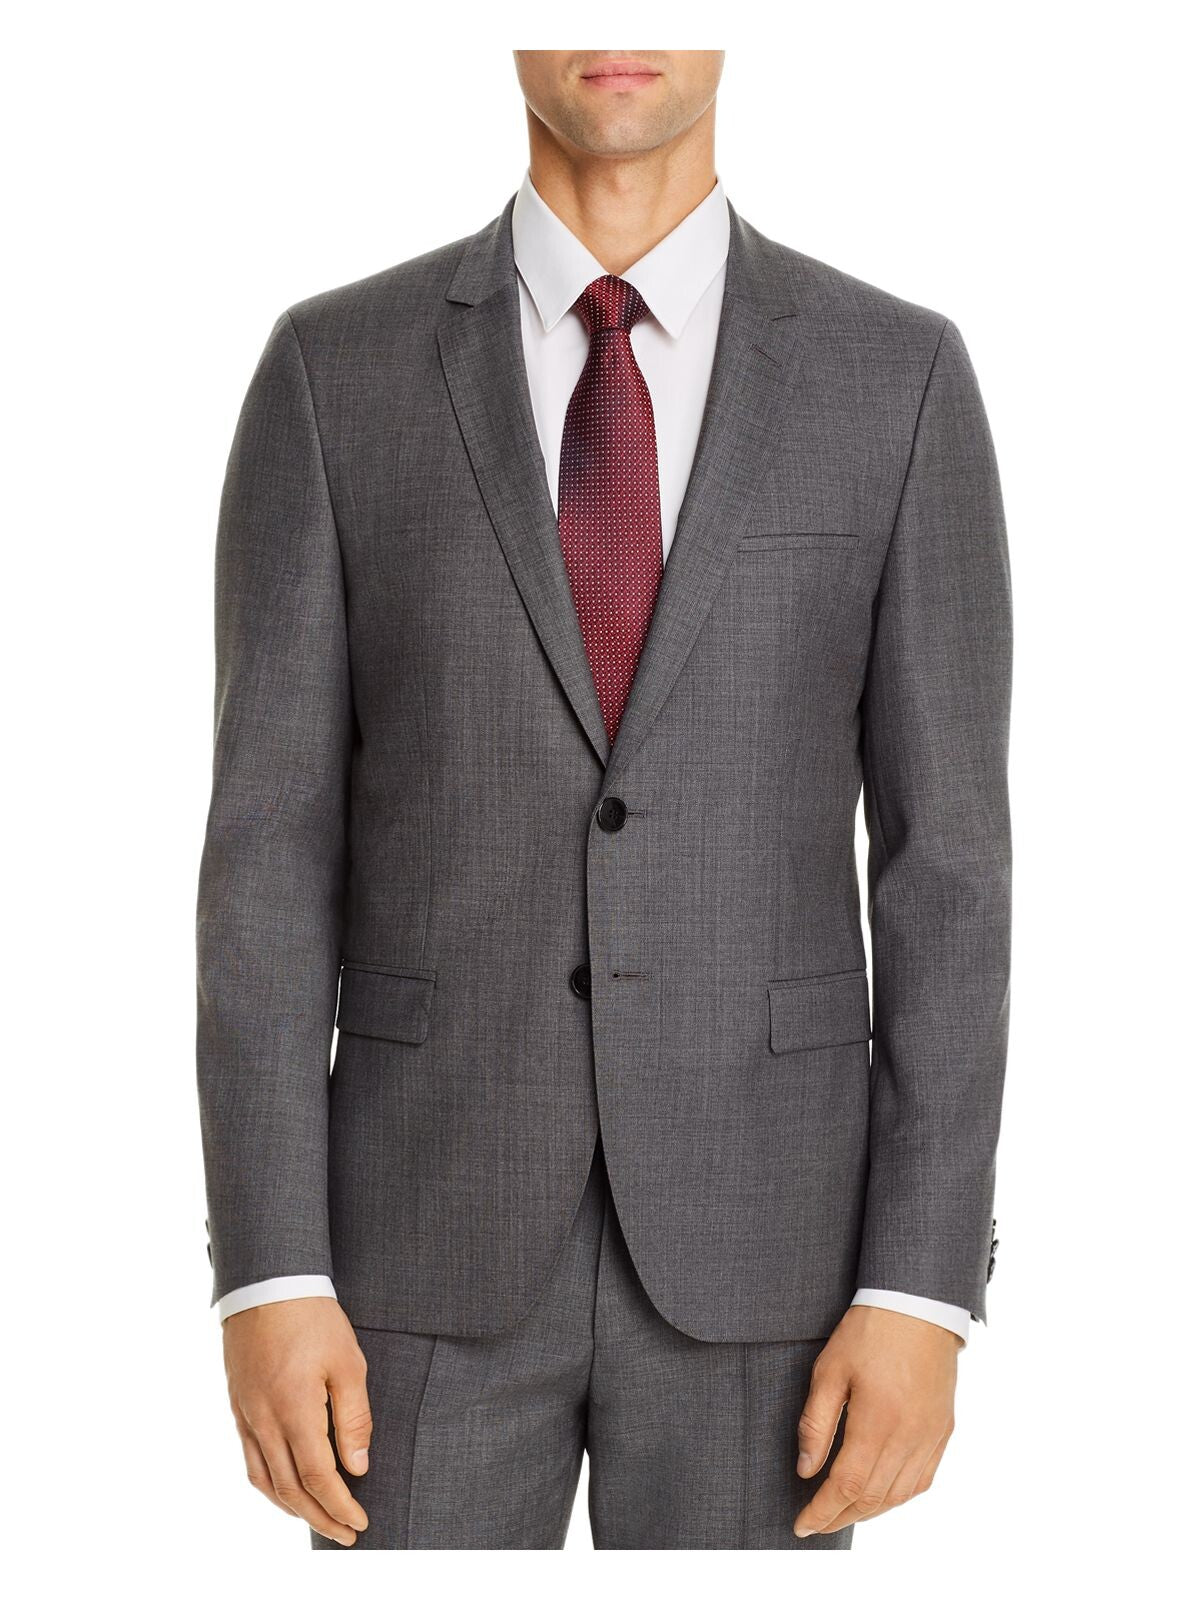 HUGO BOSS Mens Arti Sharkskin Gray Single Breasted, Extra Slim Fit Wool Blend Suit Separate Blazer Jacket 46R